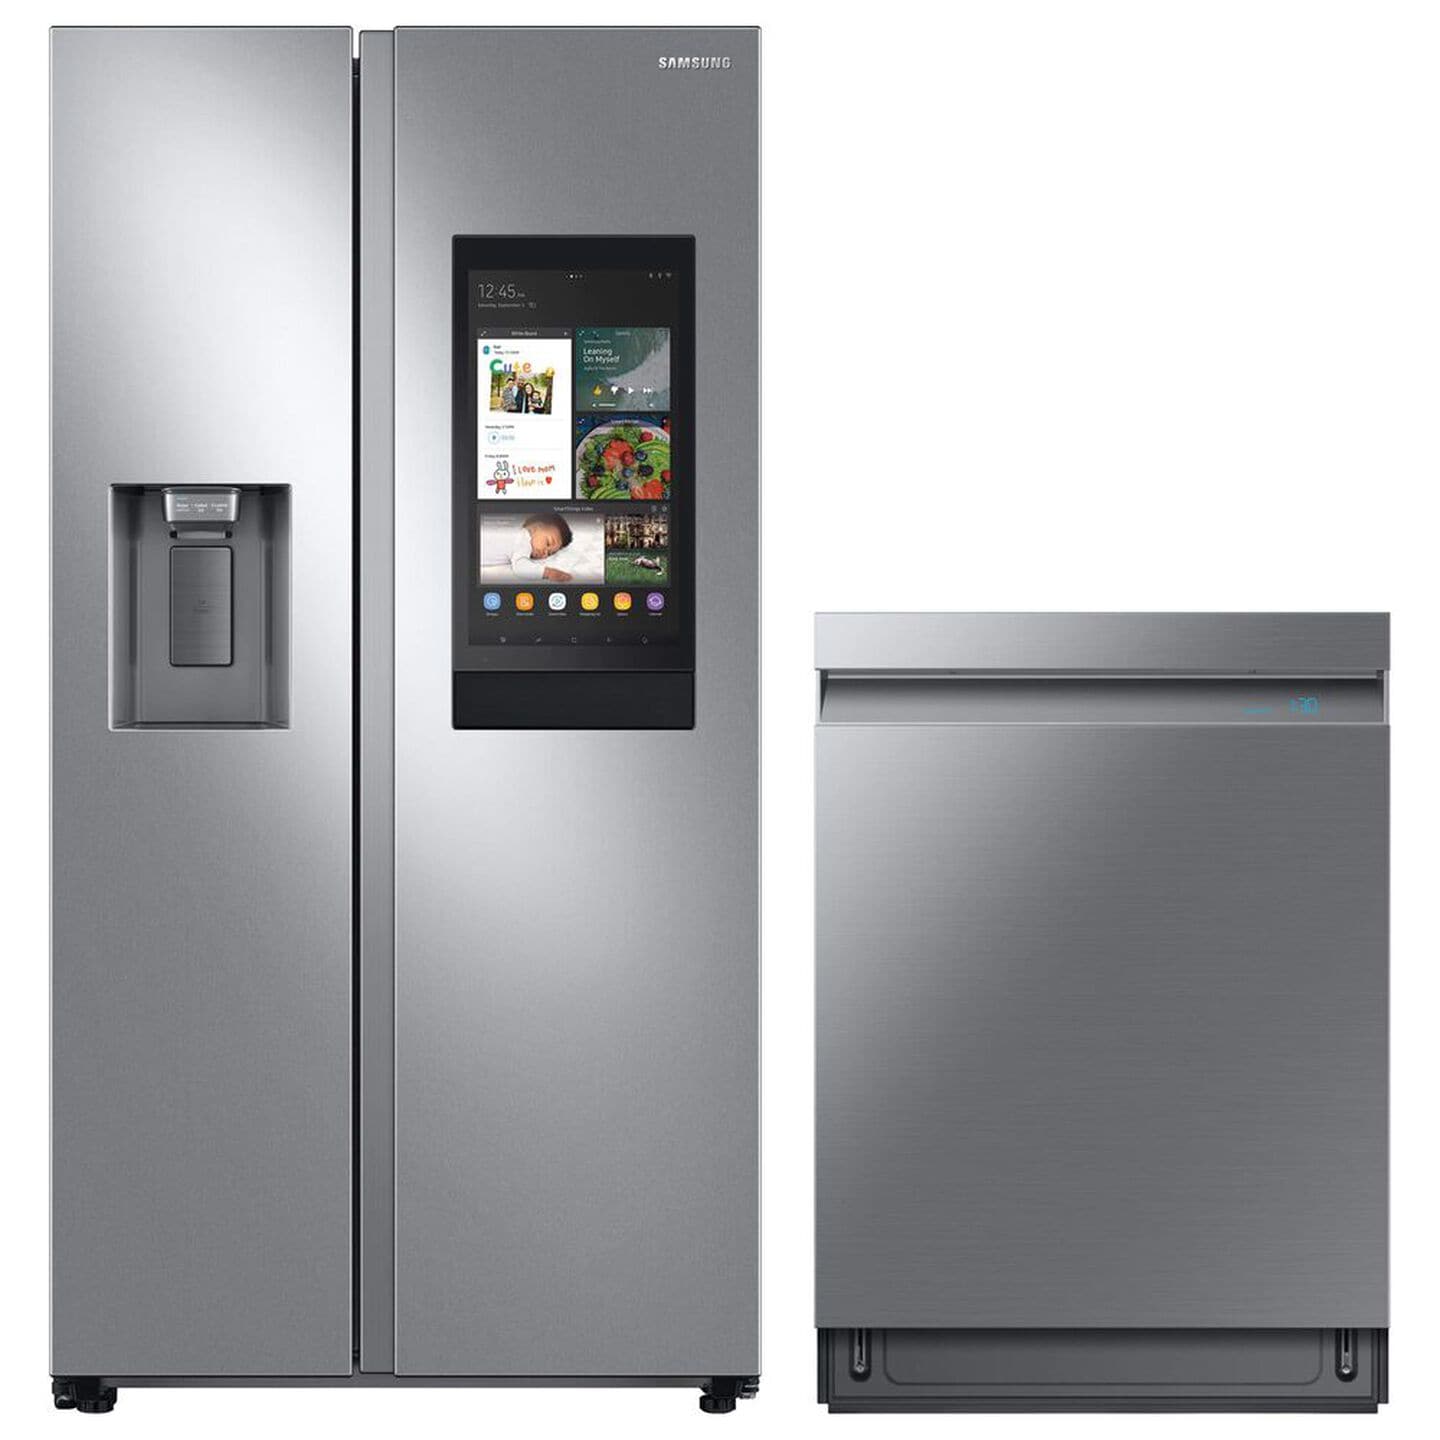 Samsung Stainless Steel Refrigerator and Dishwasher